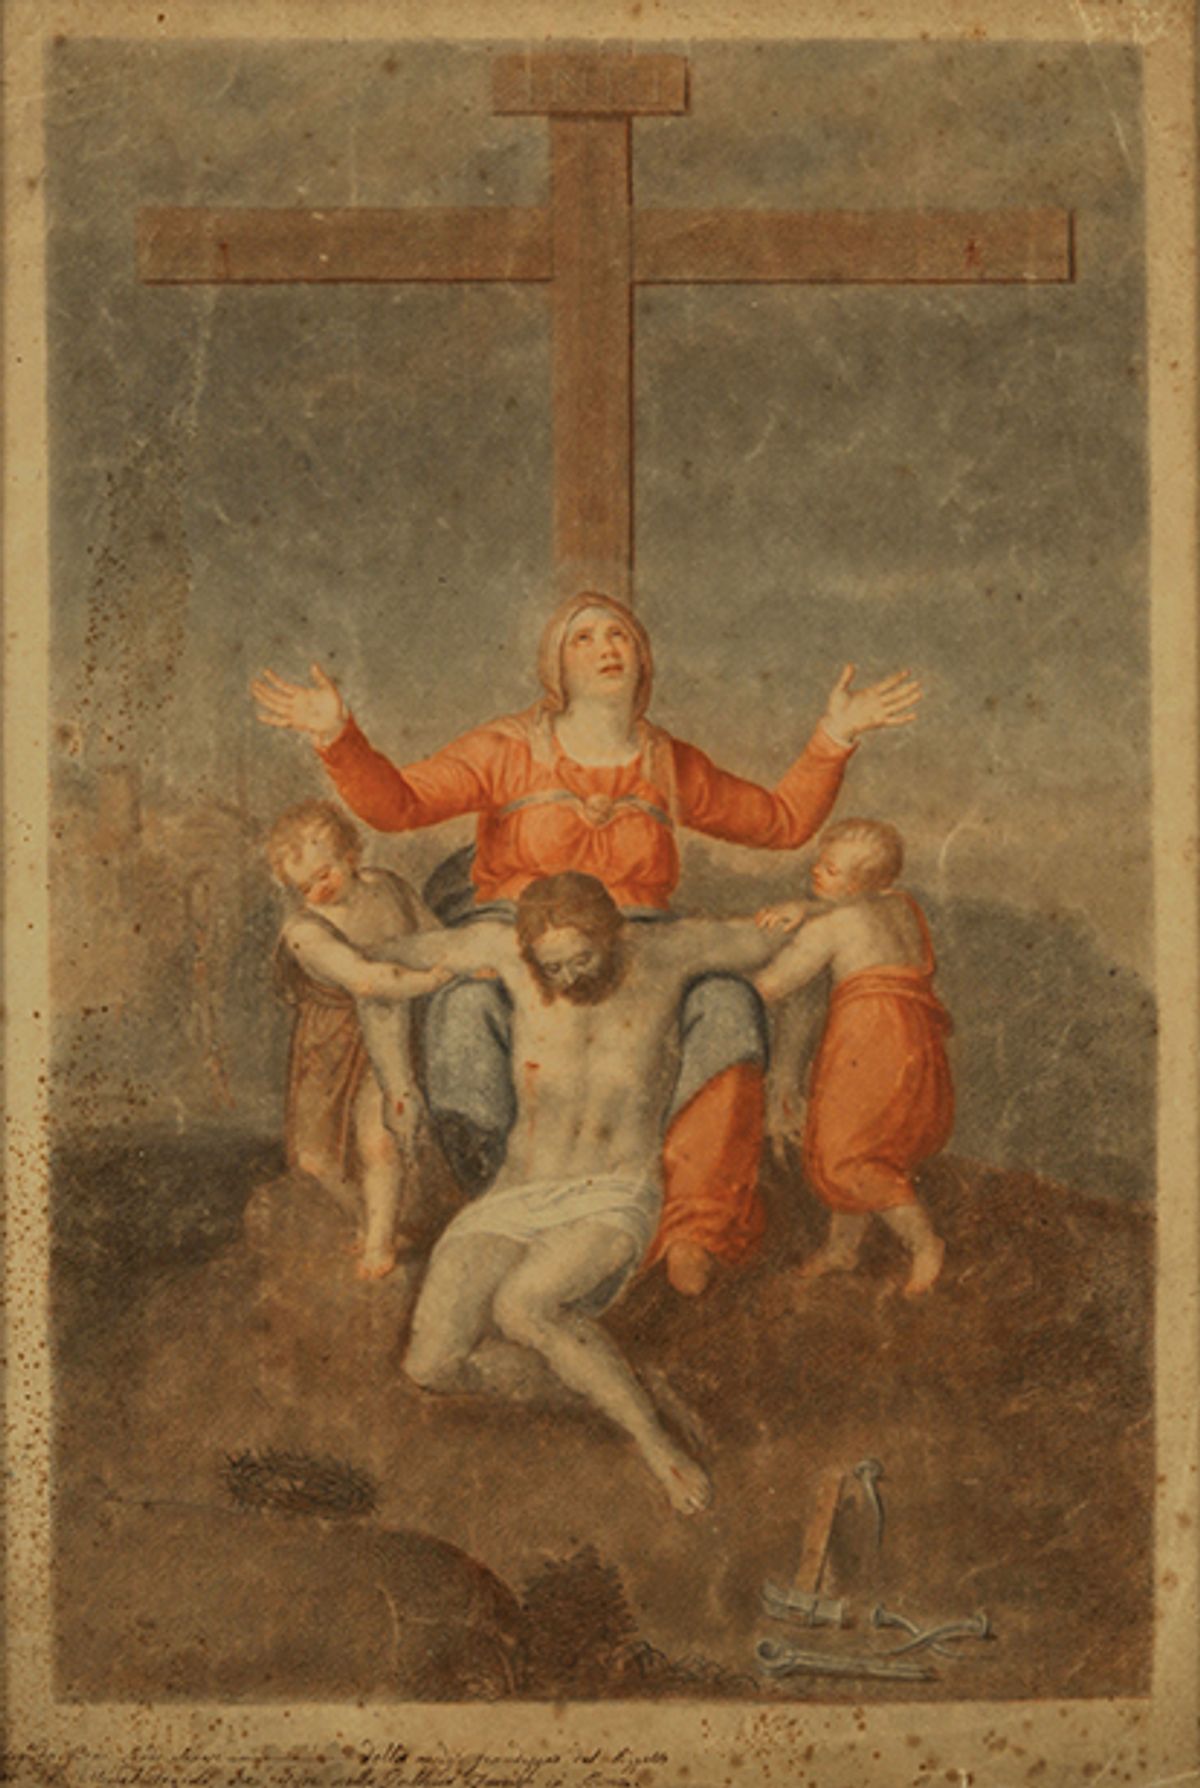 Company paid $75m for a painting described as a Michelangelo pietà Courtesy of Millennium Fine Art